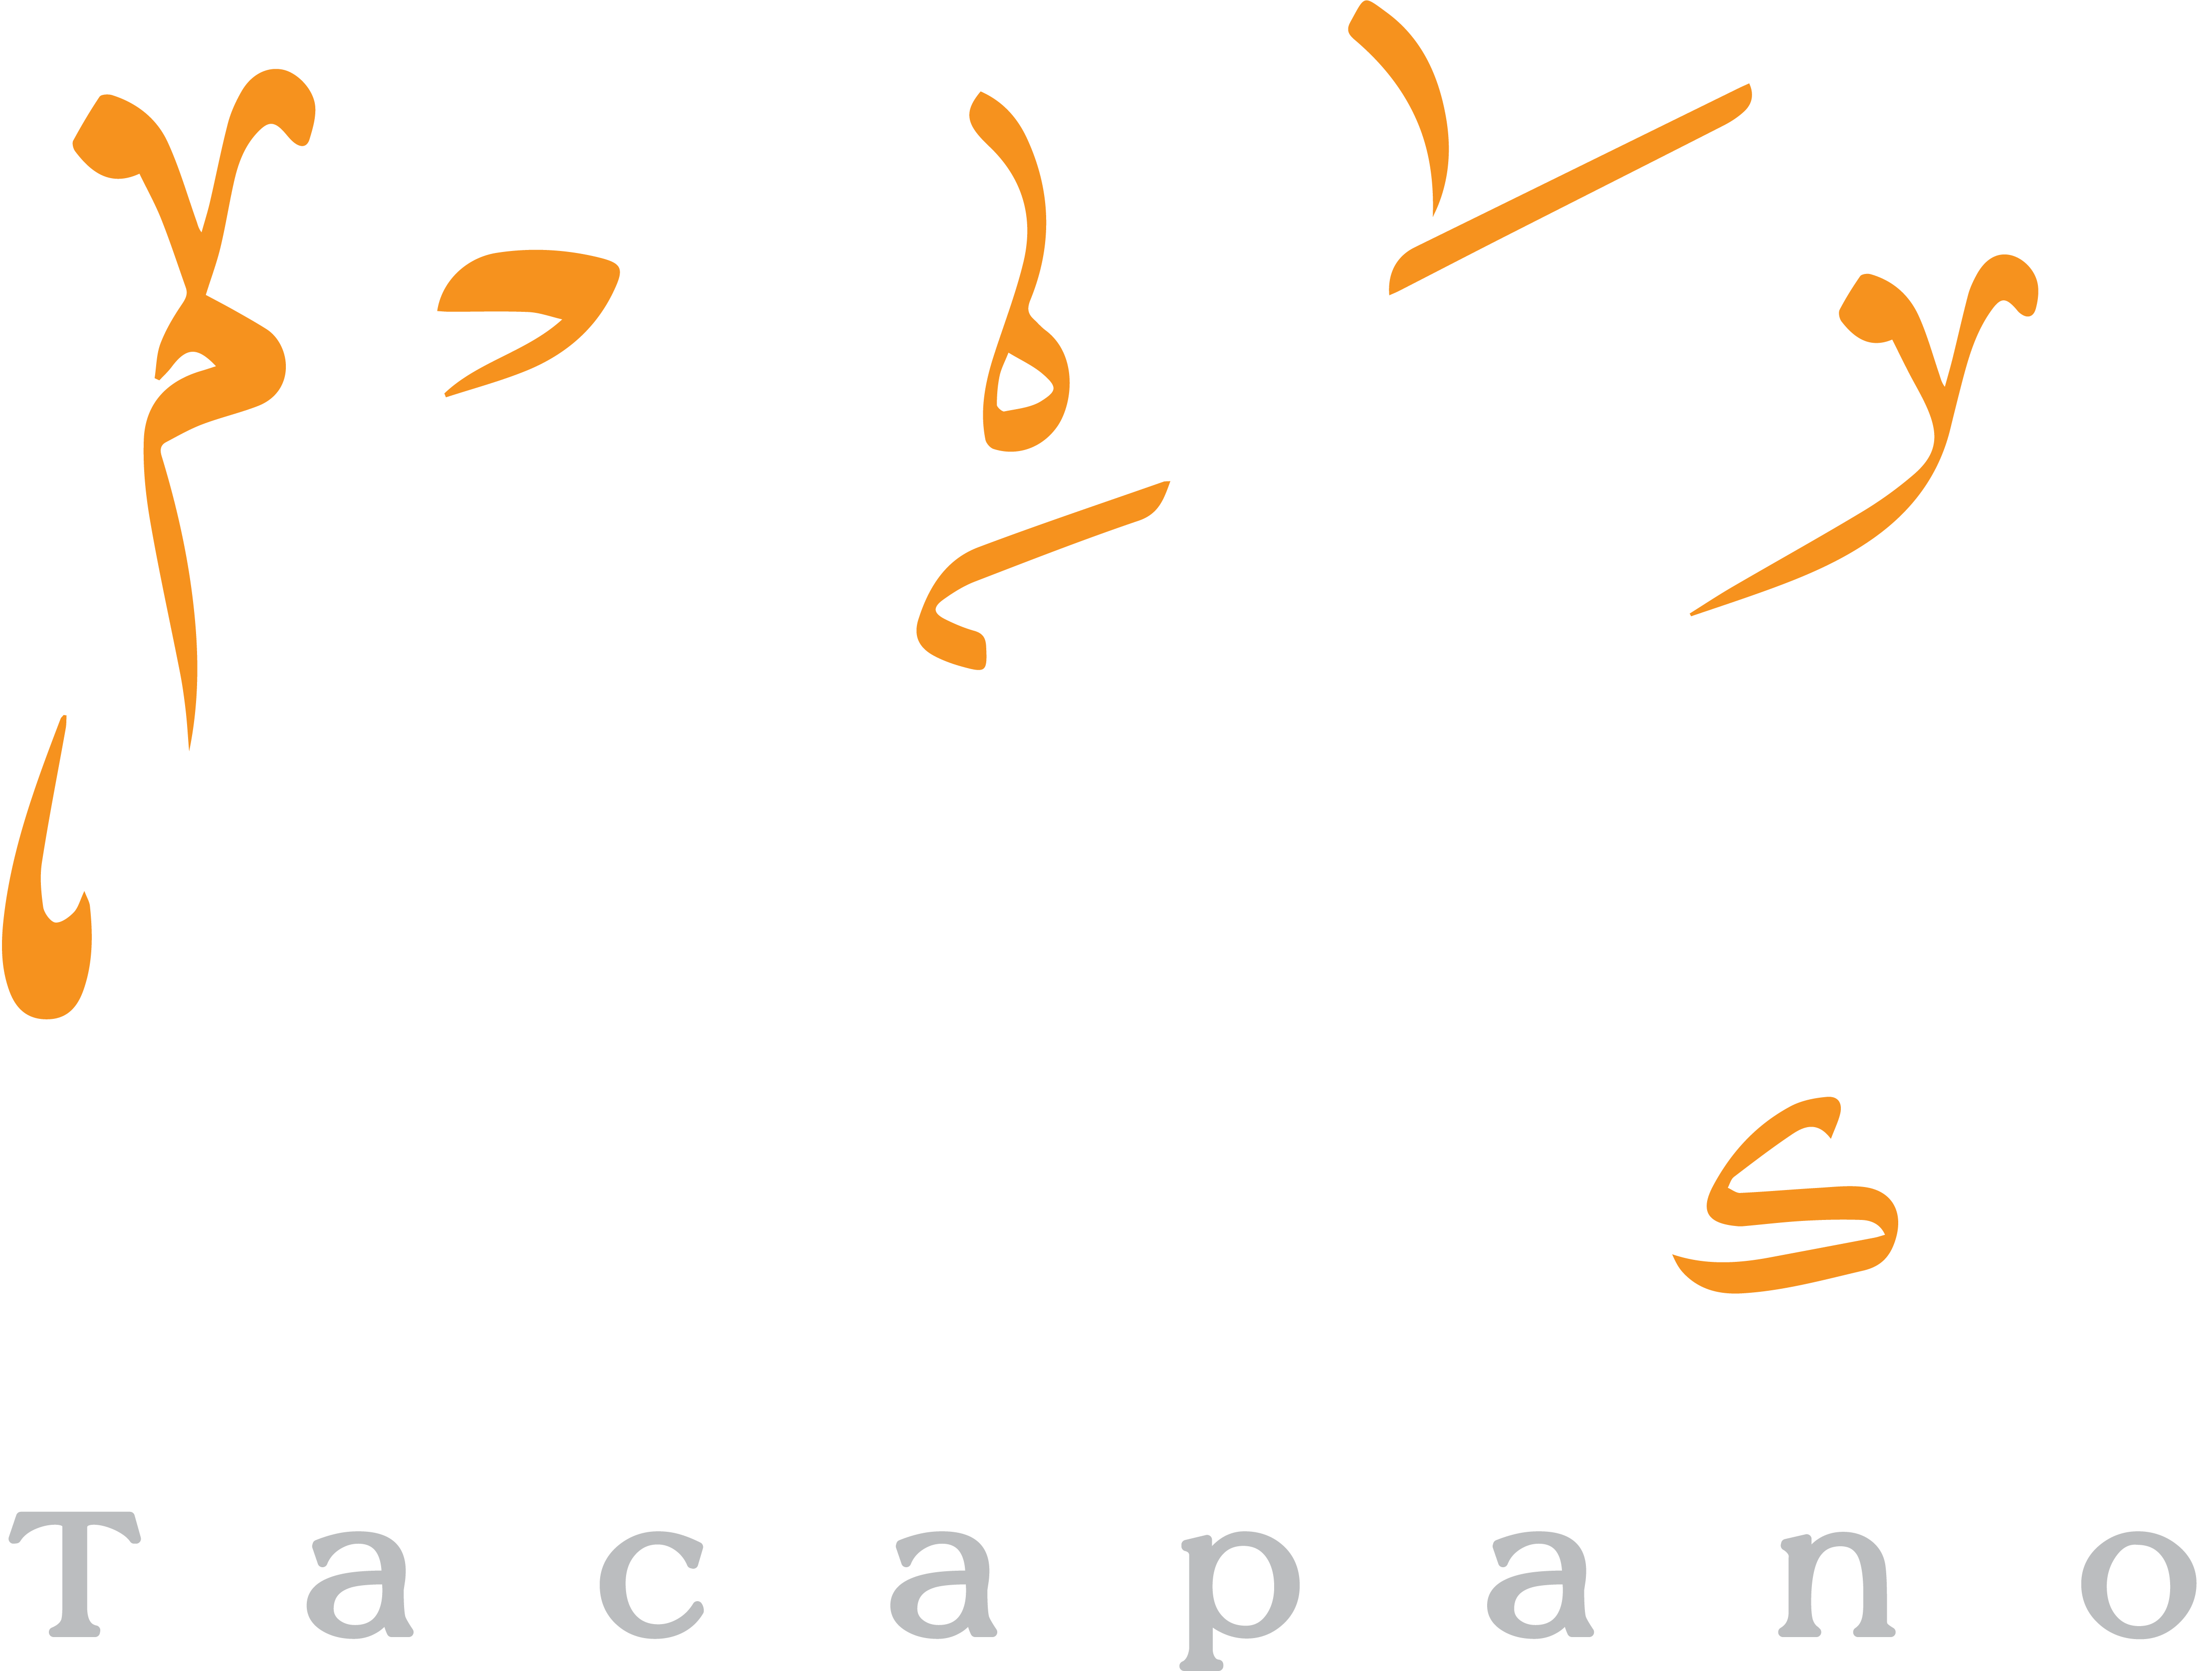 Tacapano furniture store logo